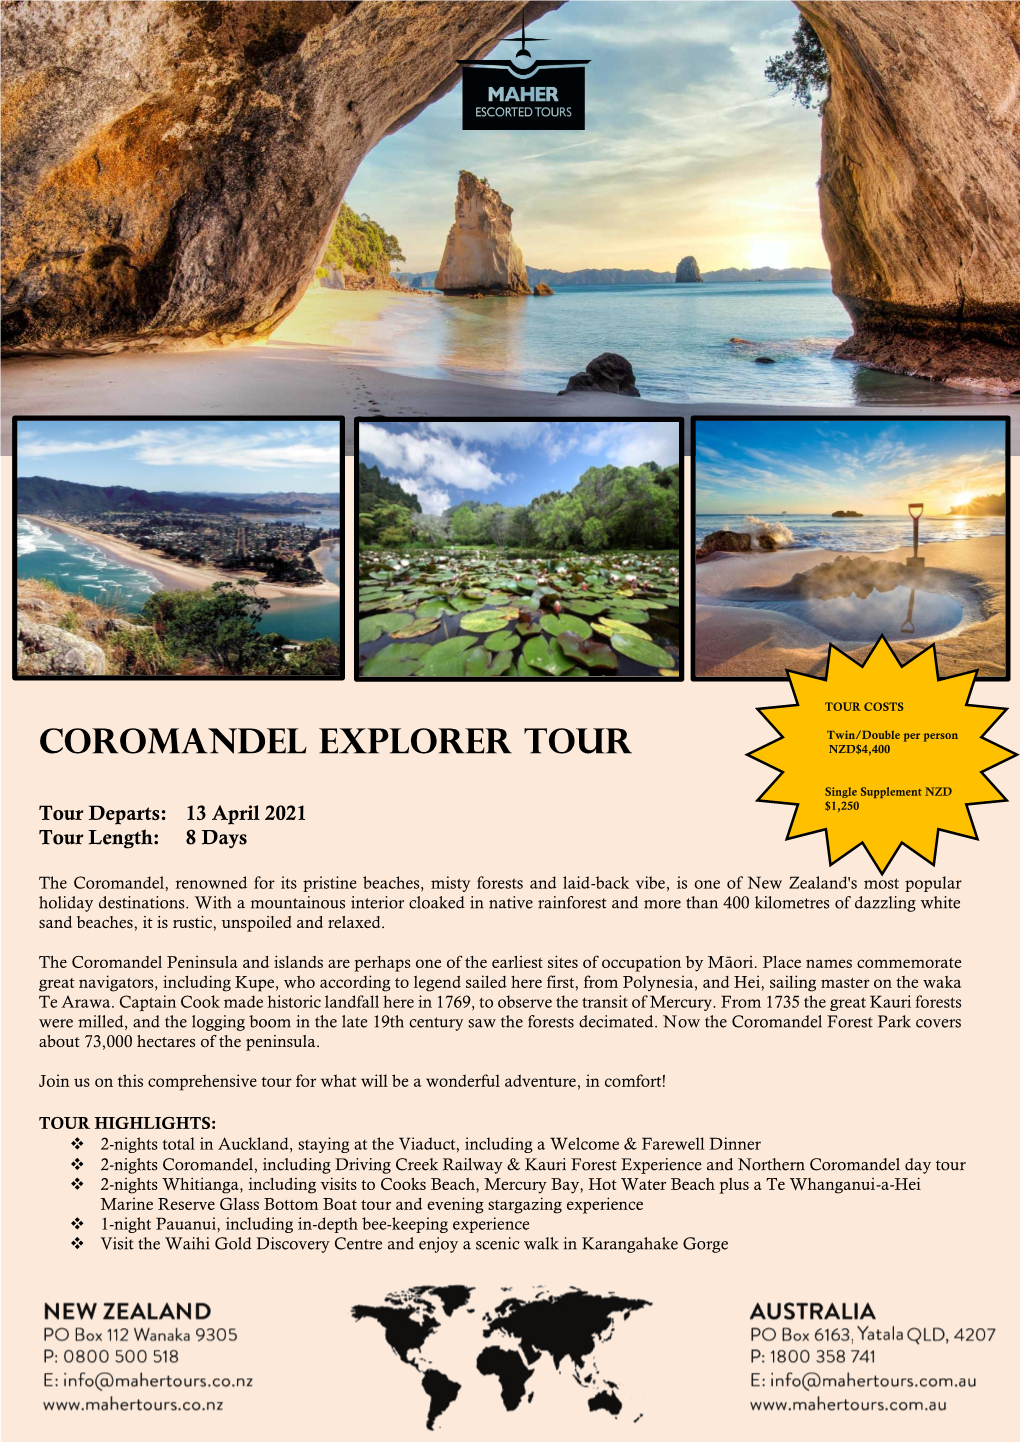 Coromandel Explorer Tour Nzd$4,400